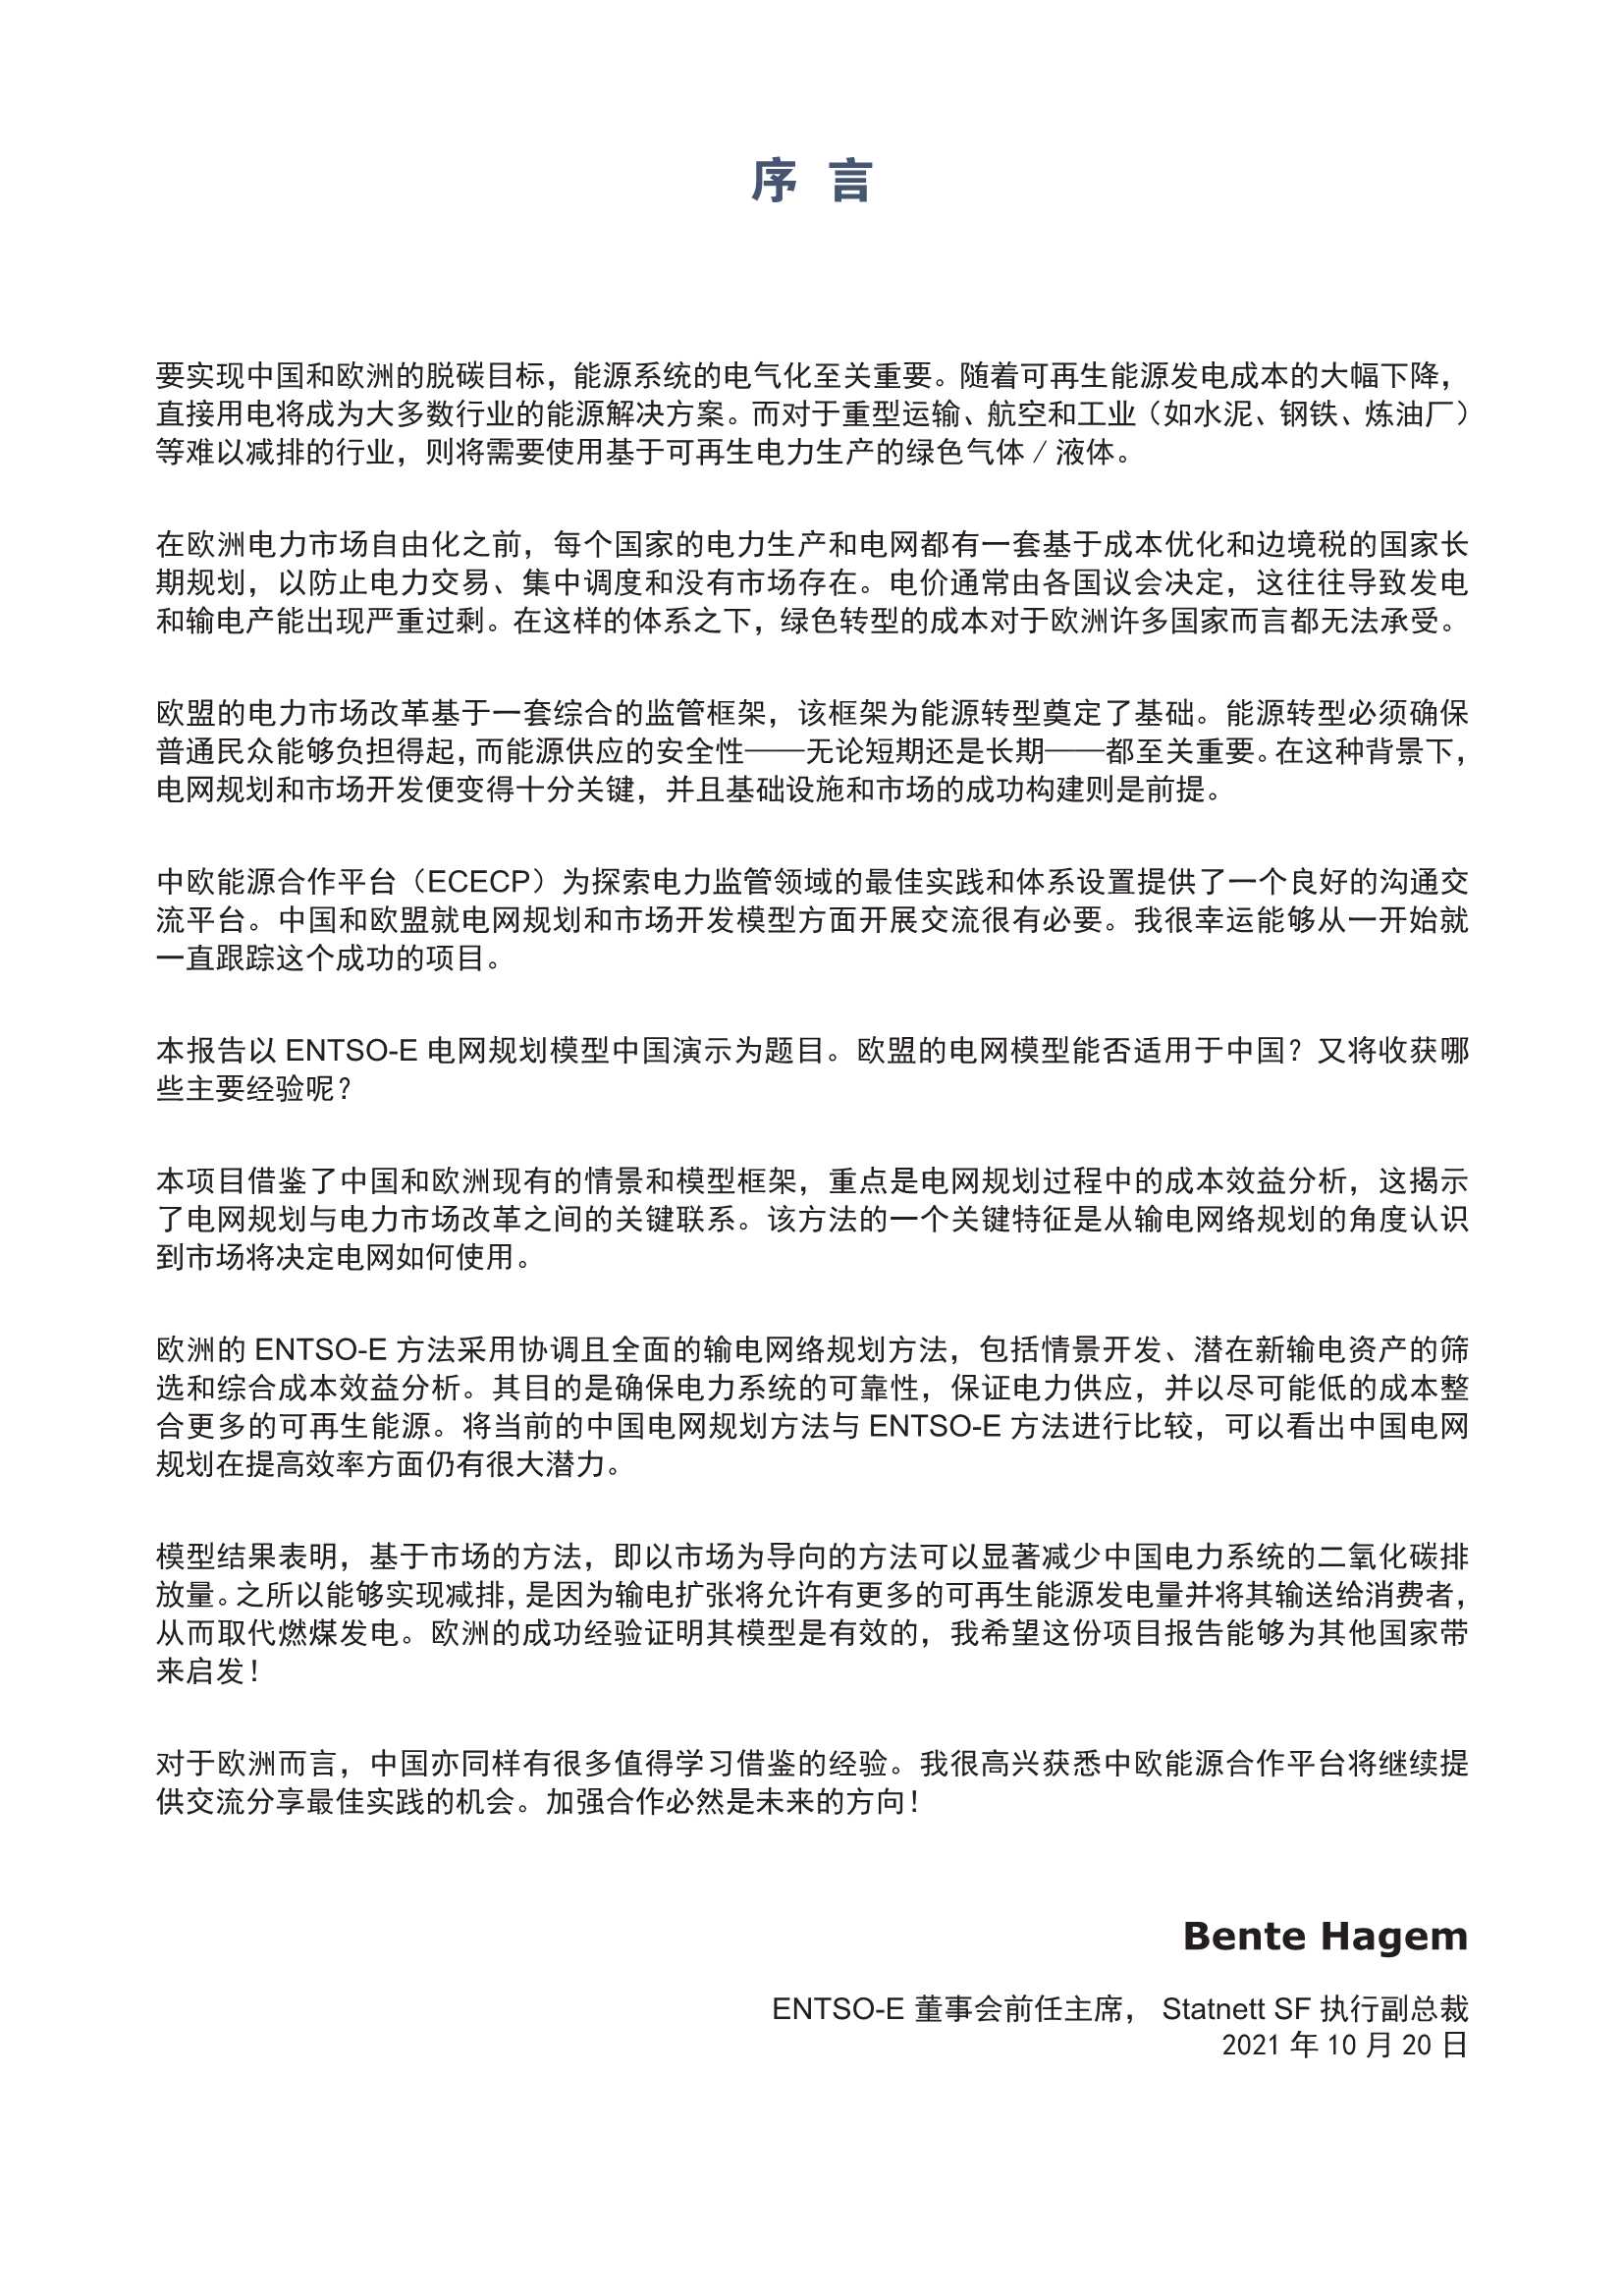 ENTSO-E 电网规划模型中国演示-2021.12-130页